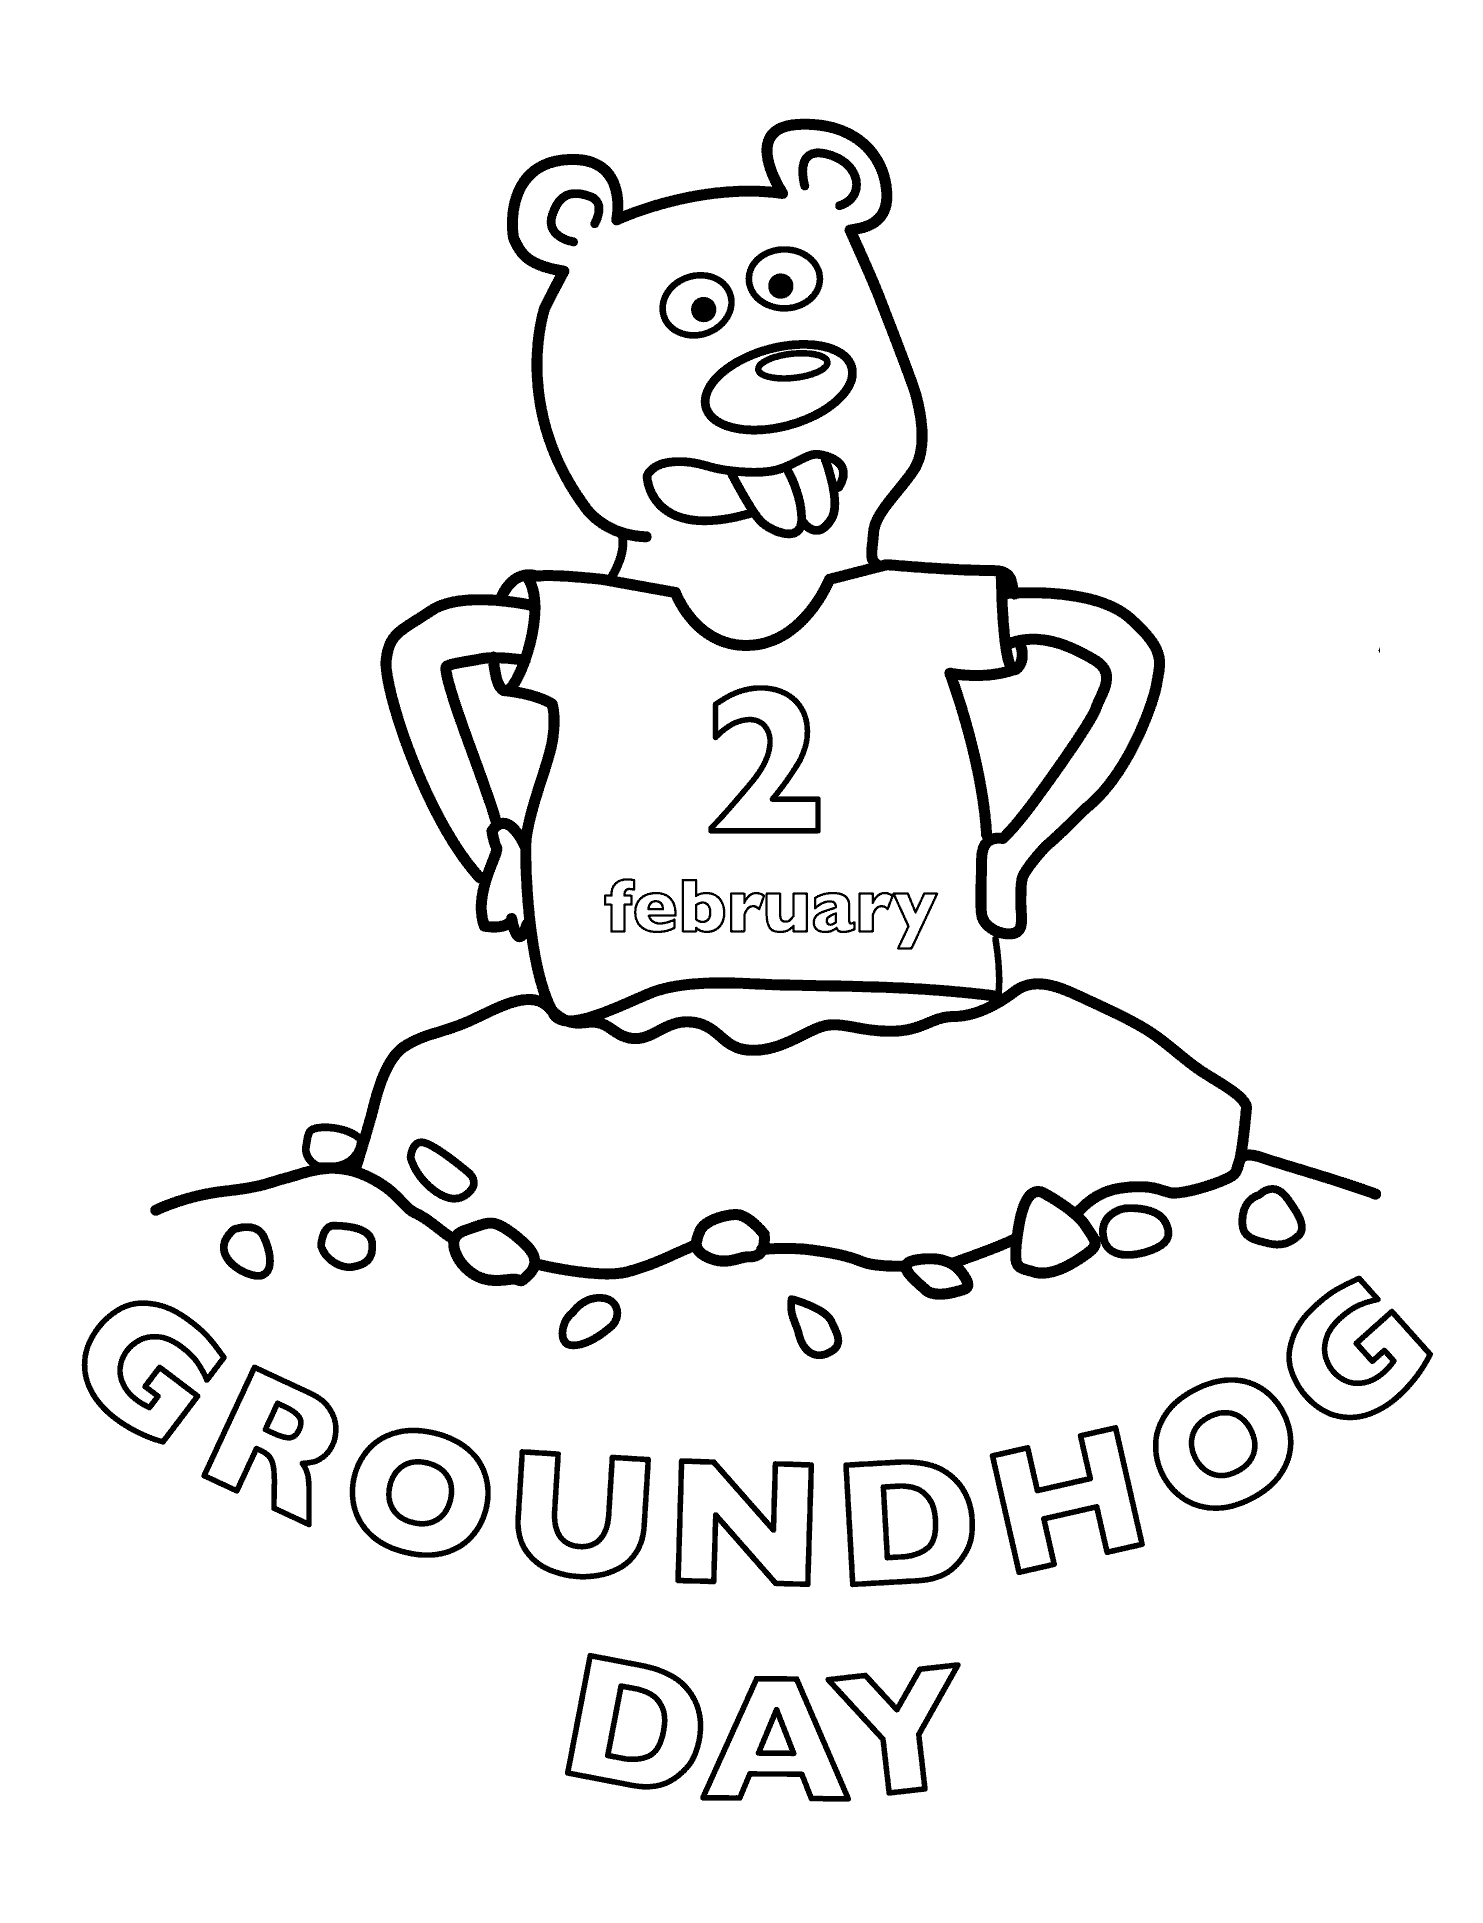 Groundhog Day – Februarys